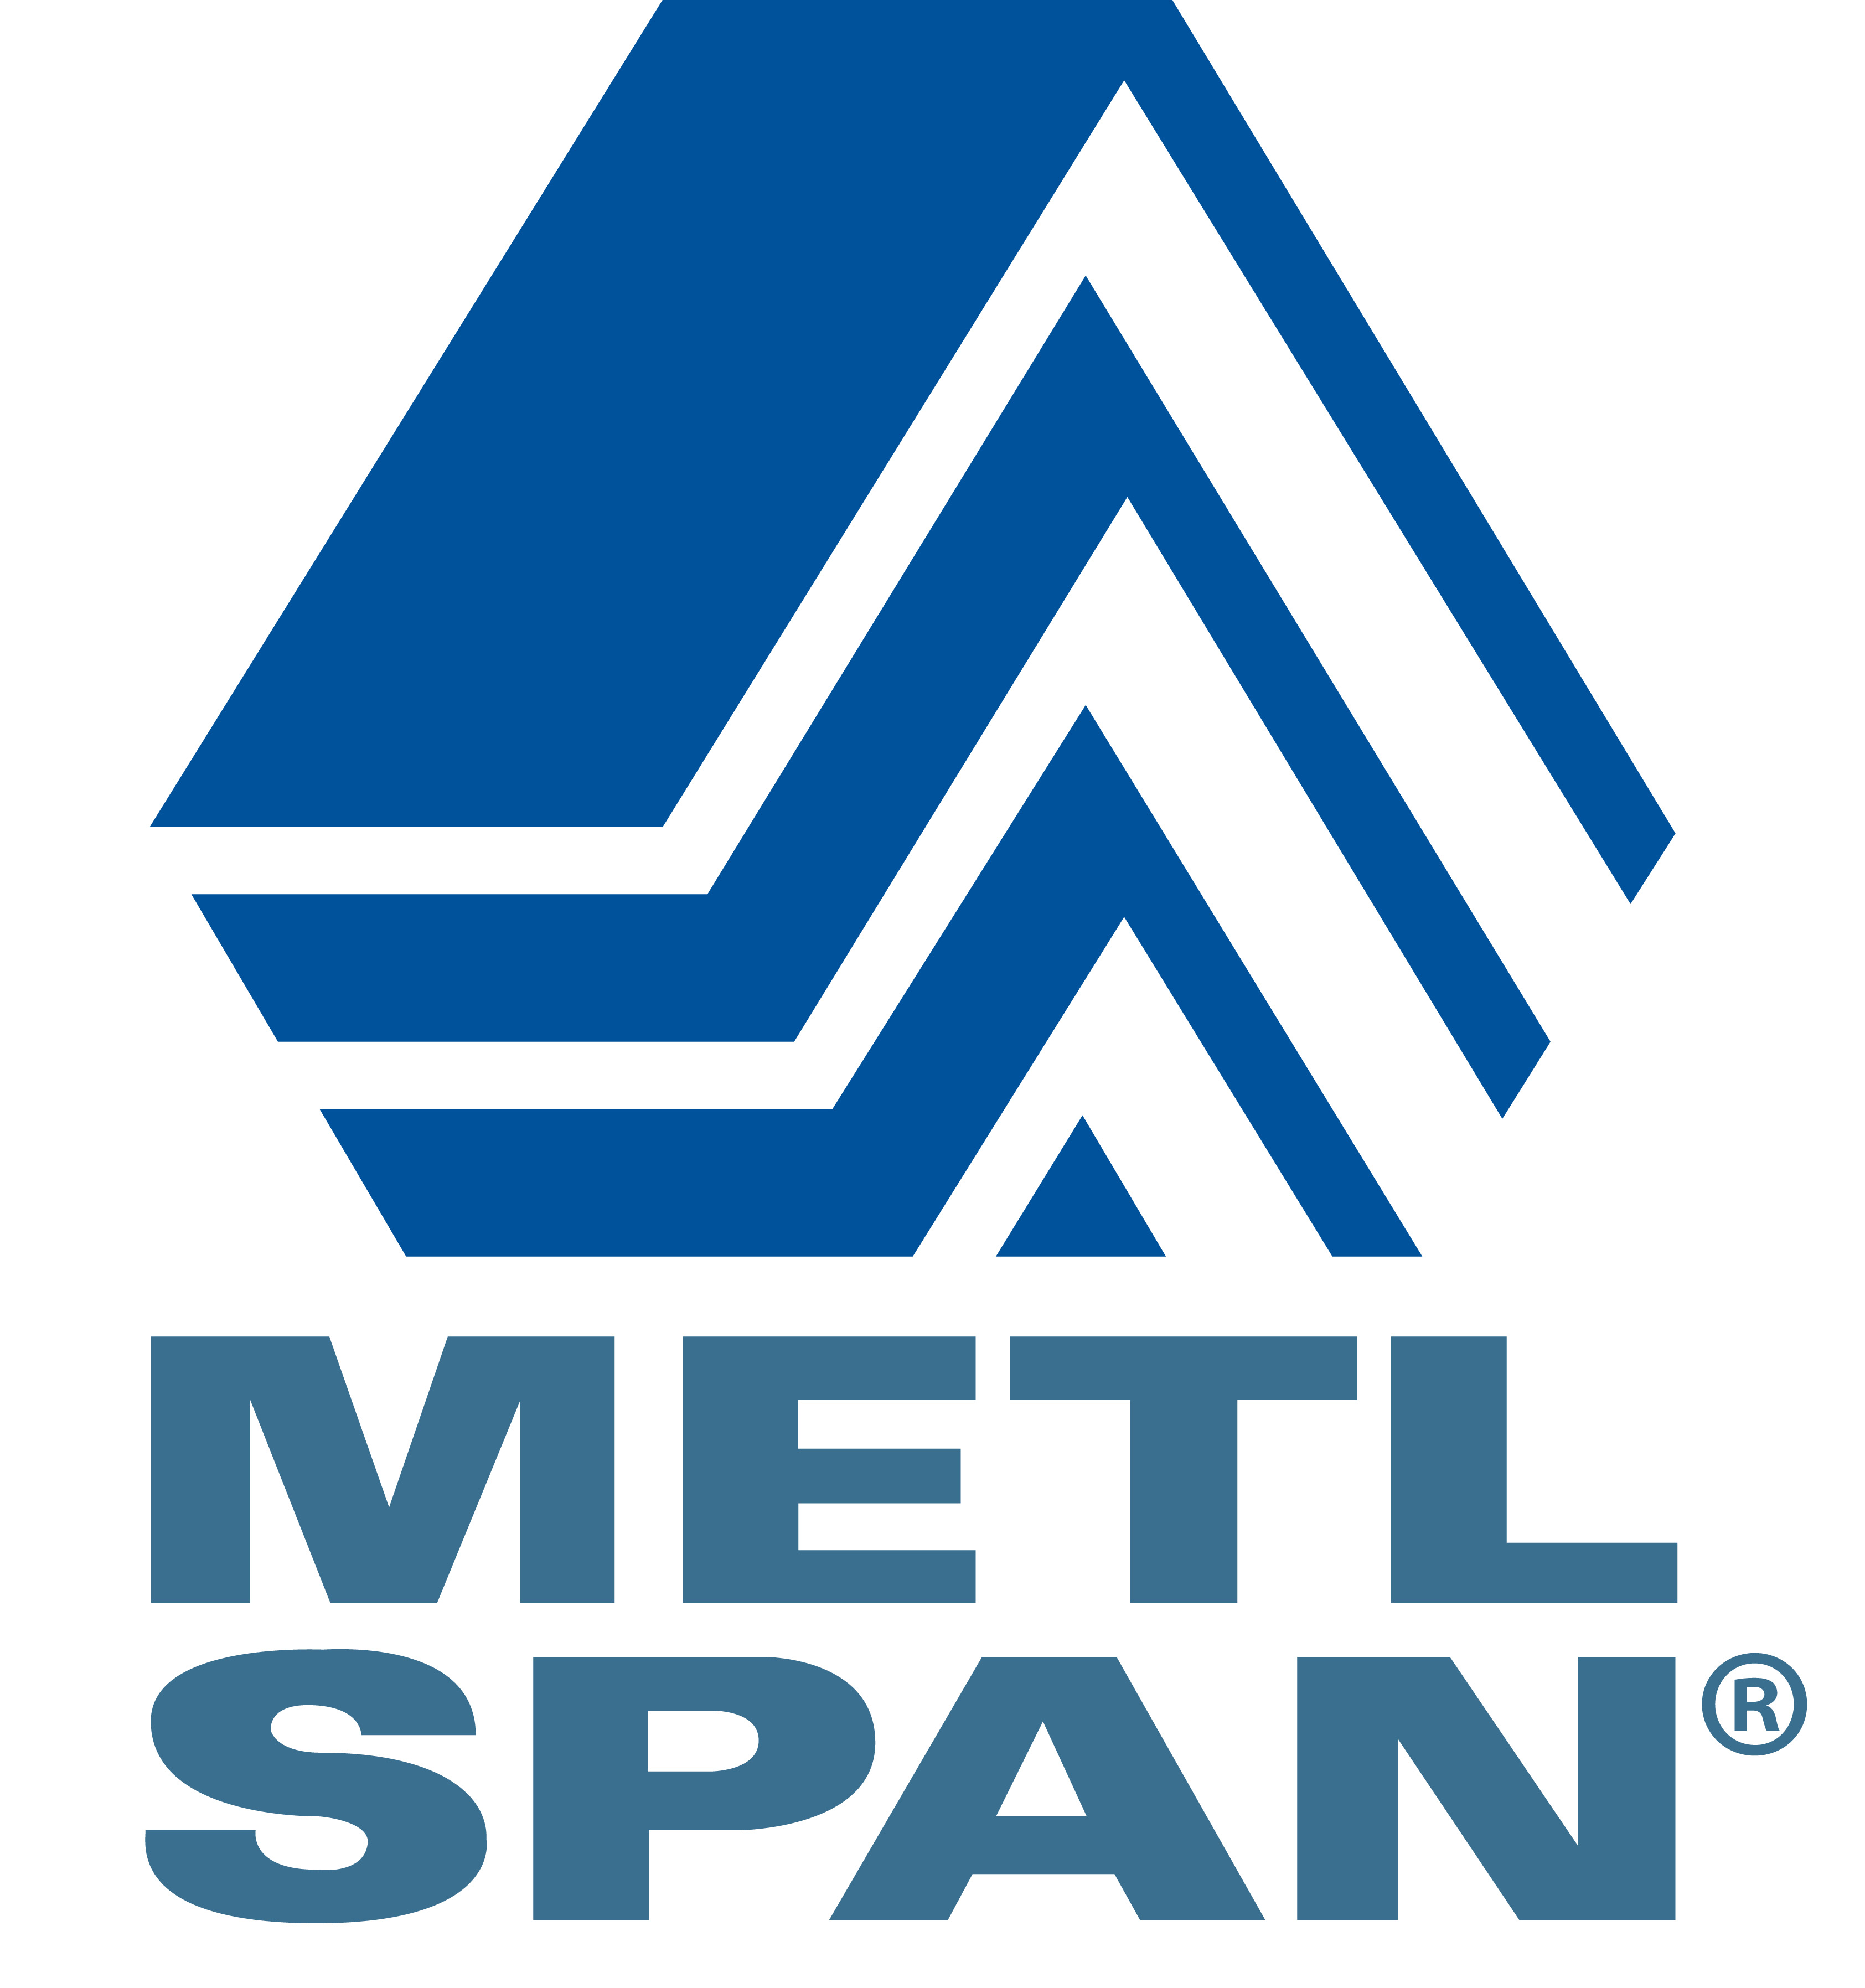 Http span. Span logo. RSPAN логотип. By span логотип. Metl maxsulotlari logo PNG.